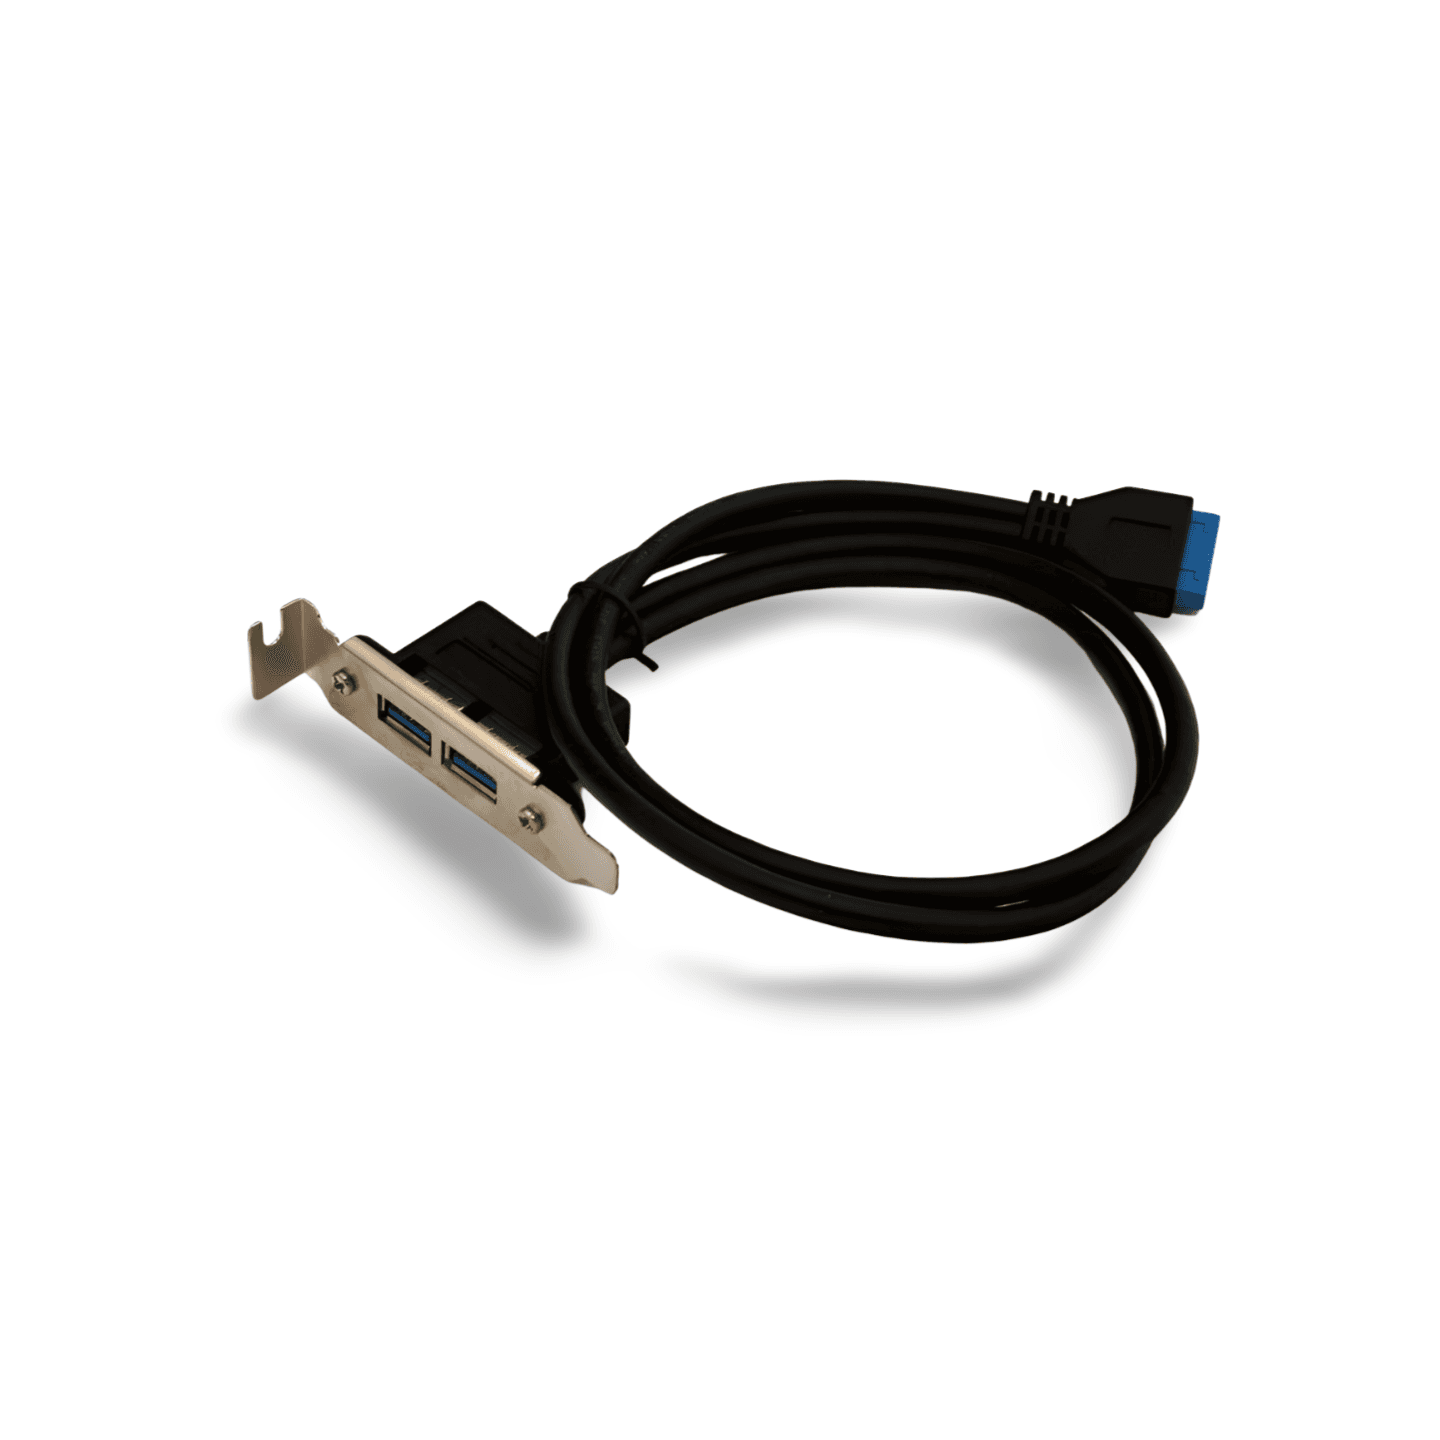 1 8ft Low Profile USB 3.0 Panel Mount Dual Port 20 Pin Header Cable 1U black